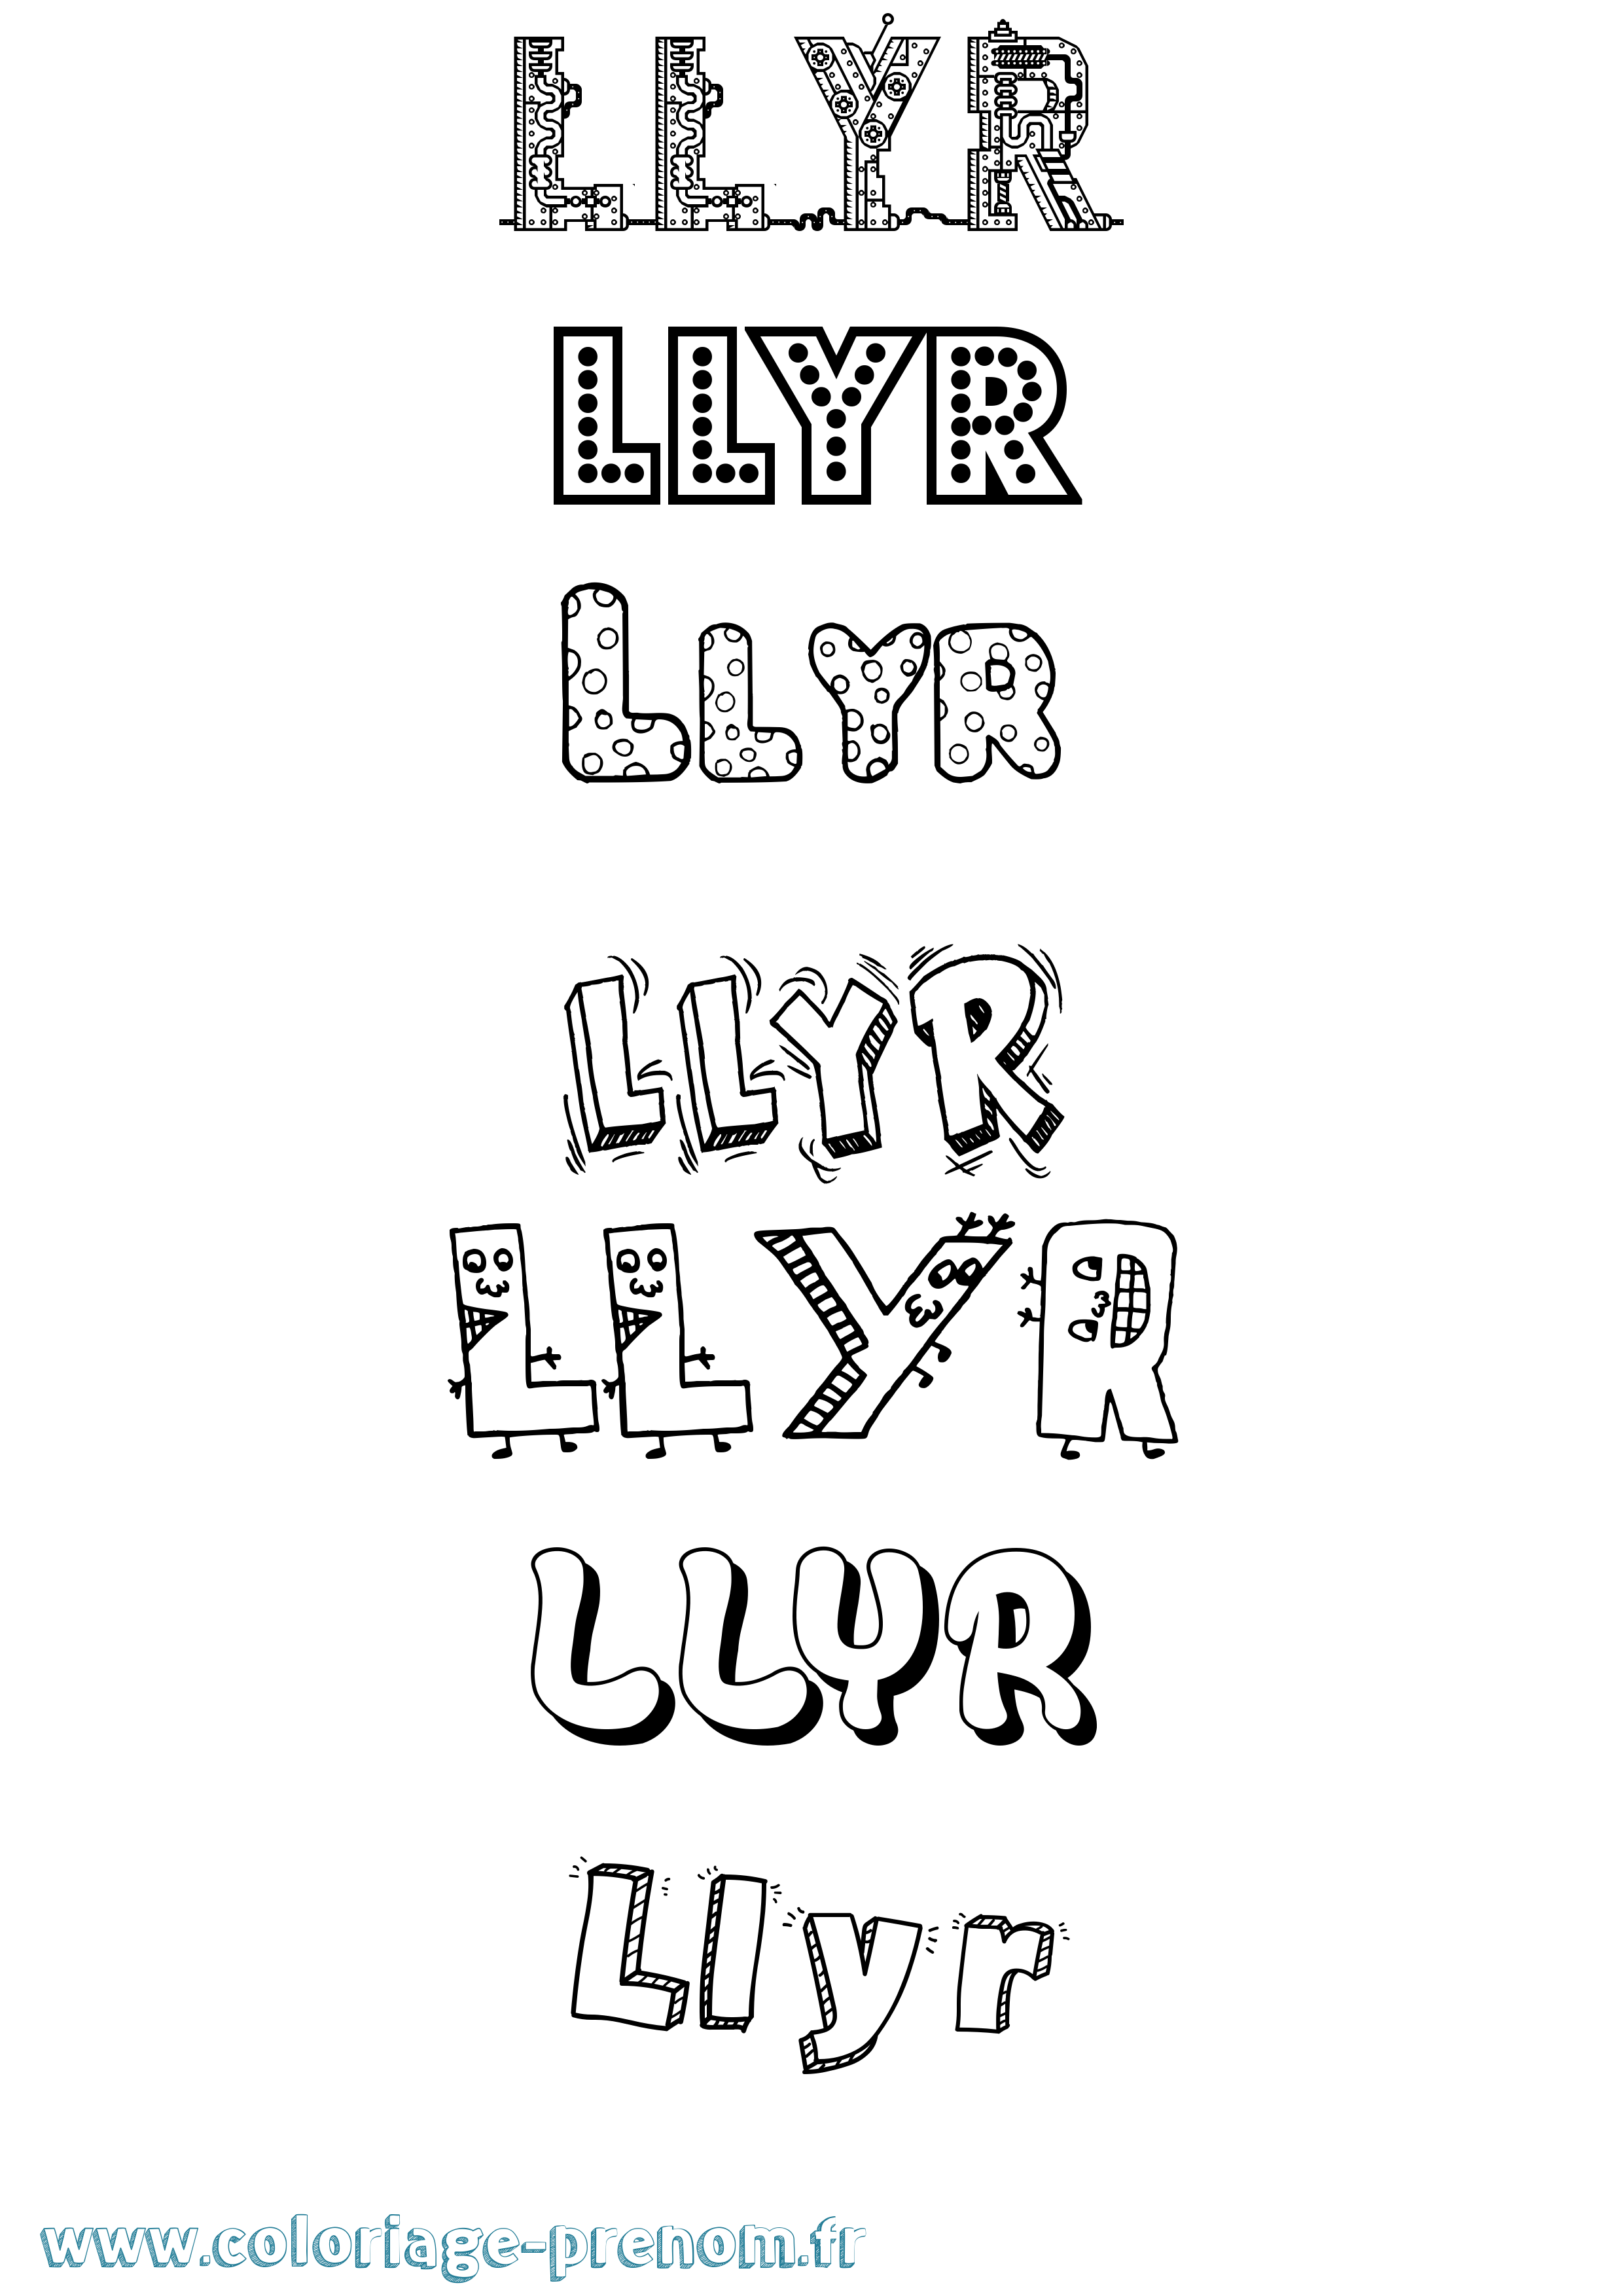 Coloriage prénom Llyr Fun